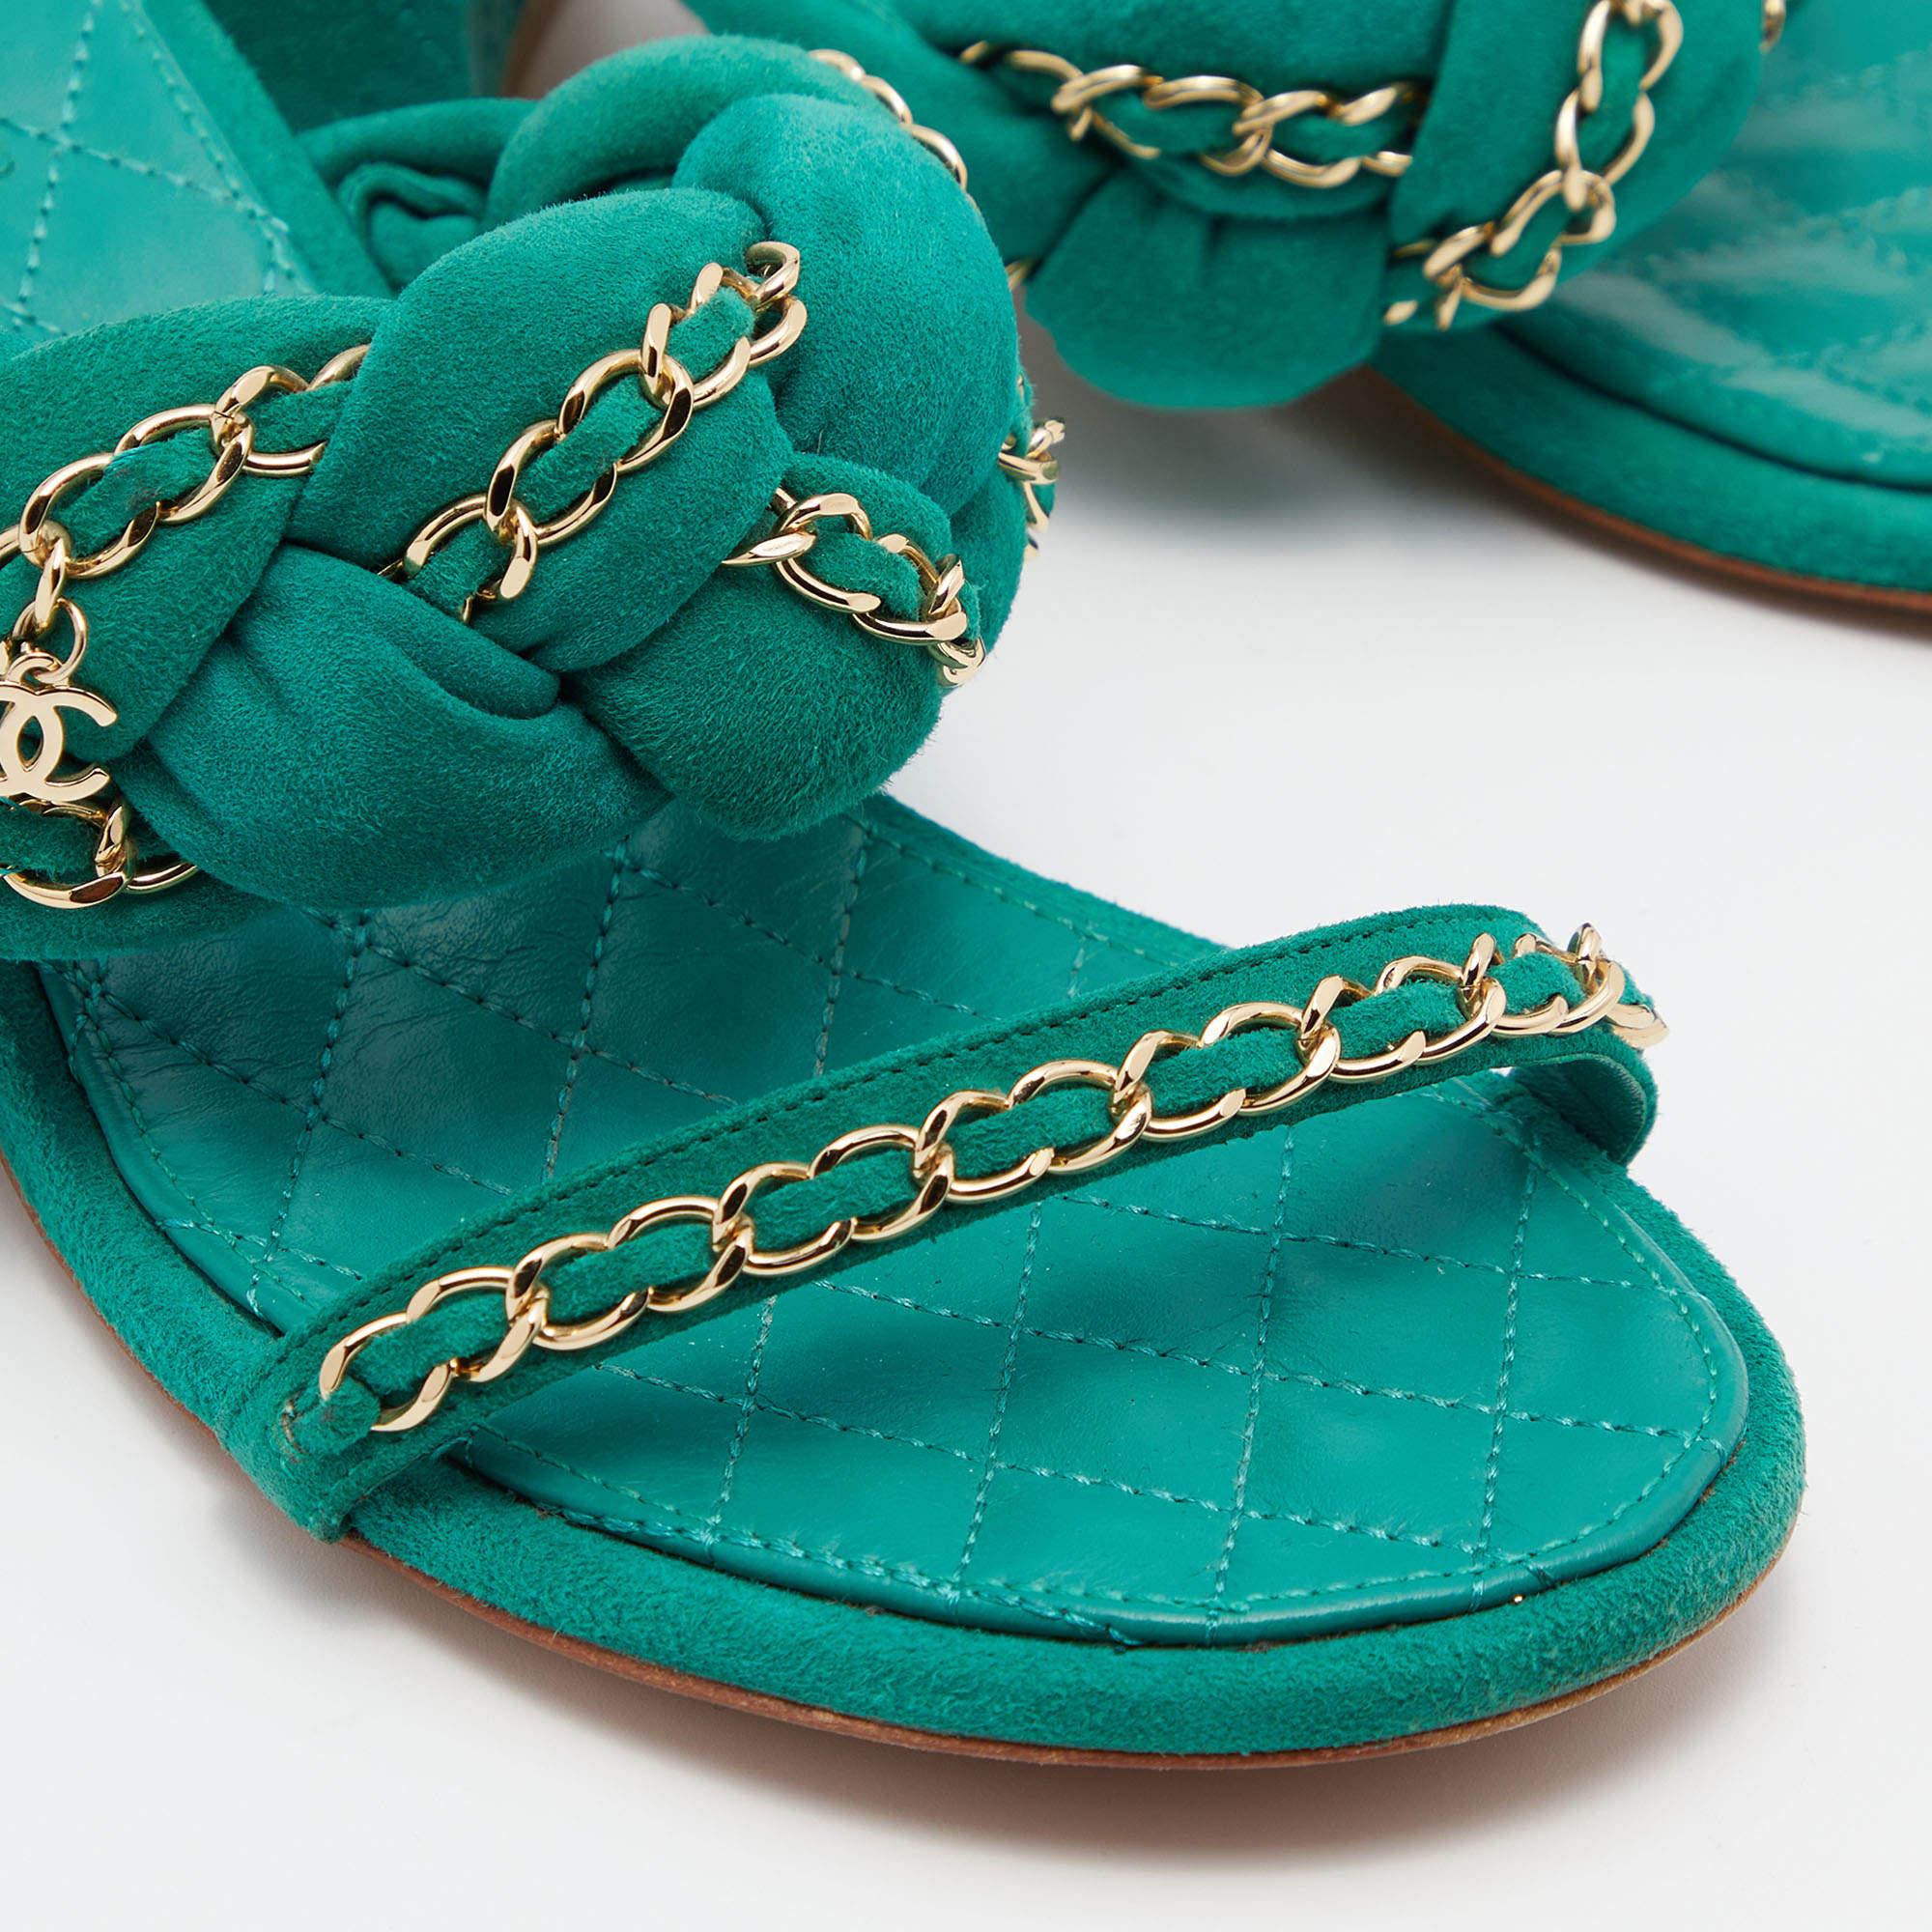 Chanel Green Suede Chain Embellished Flat Slide Sandals Size 38.5 1